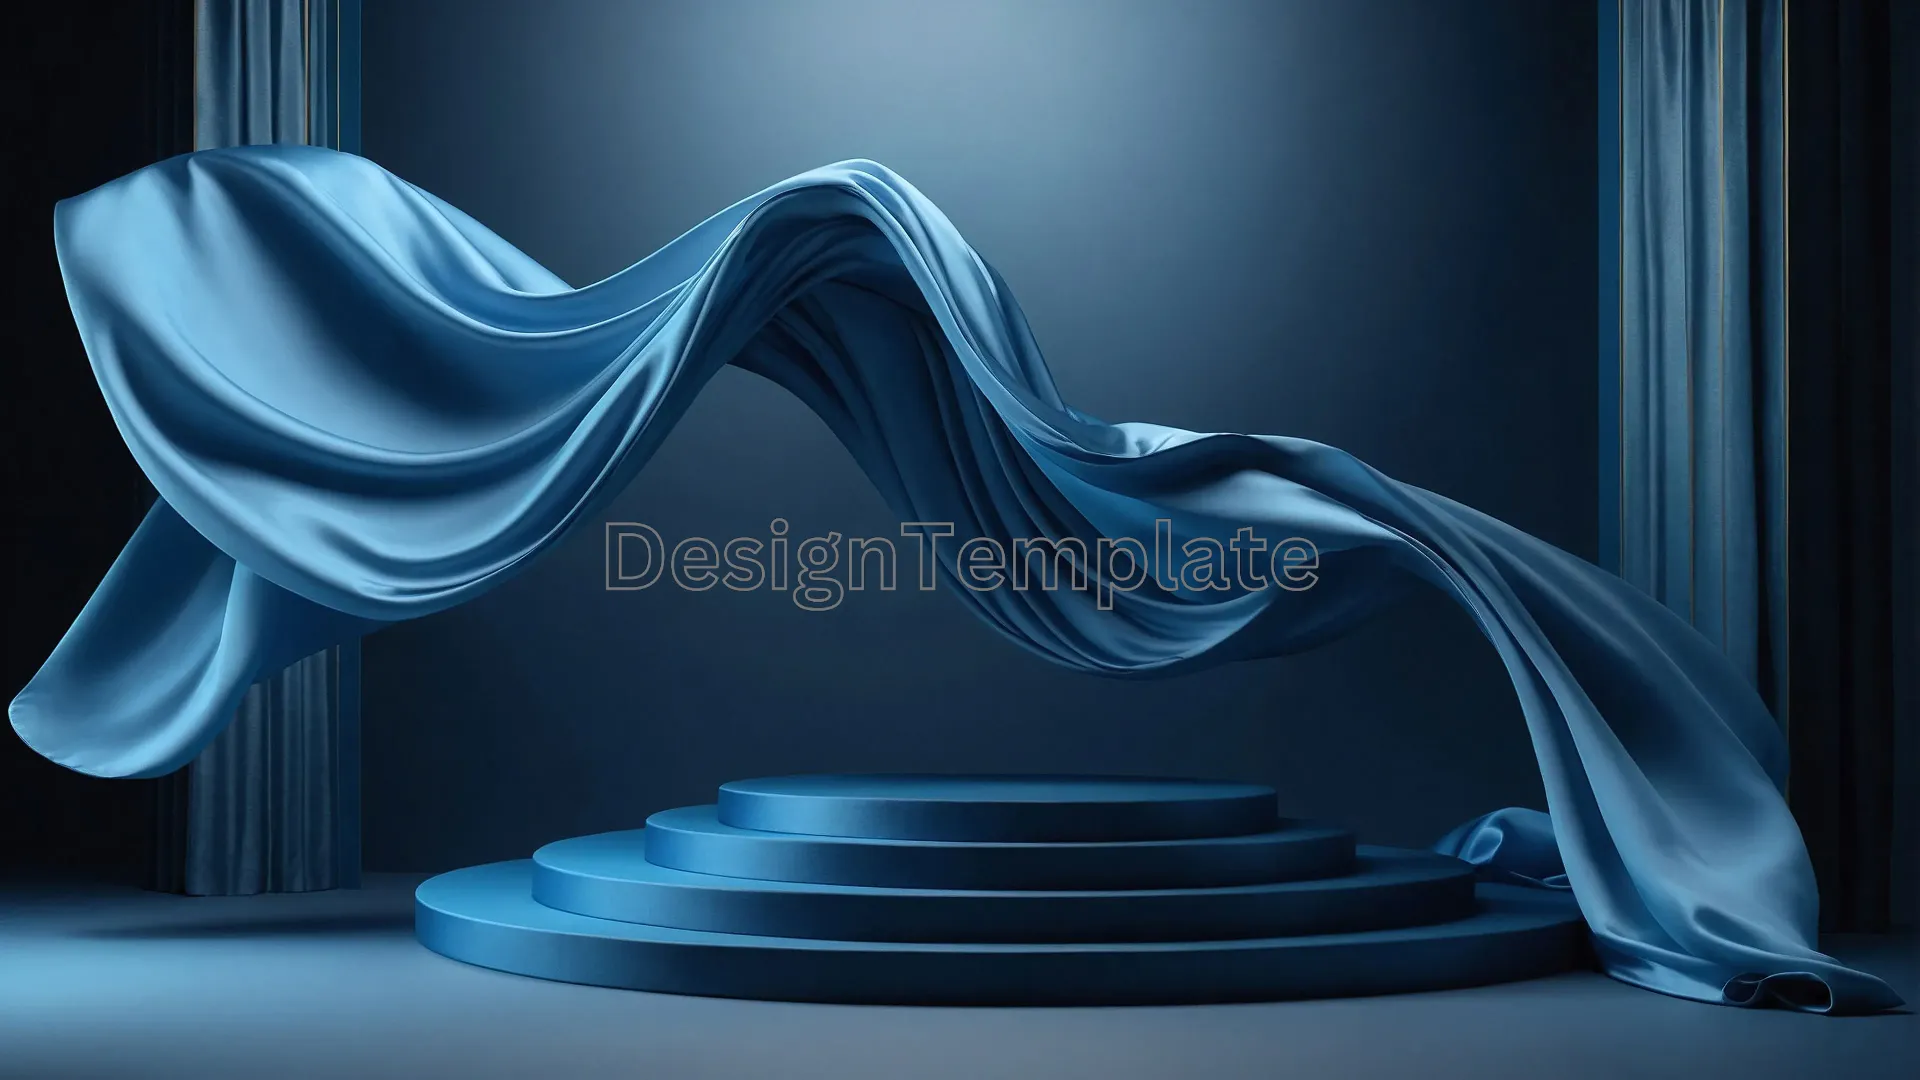 Silk Fabric and 3D Podium Background Image